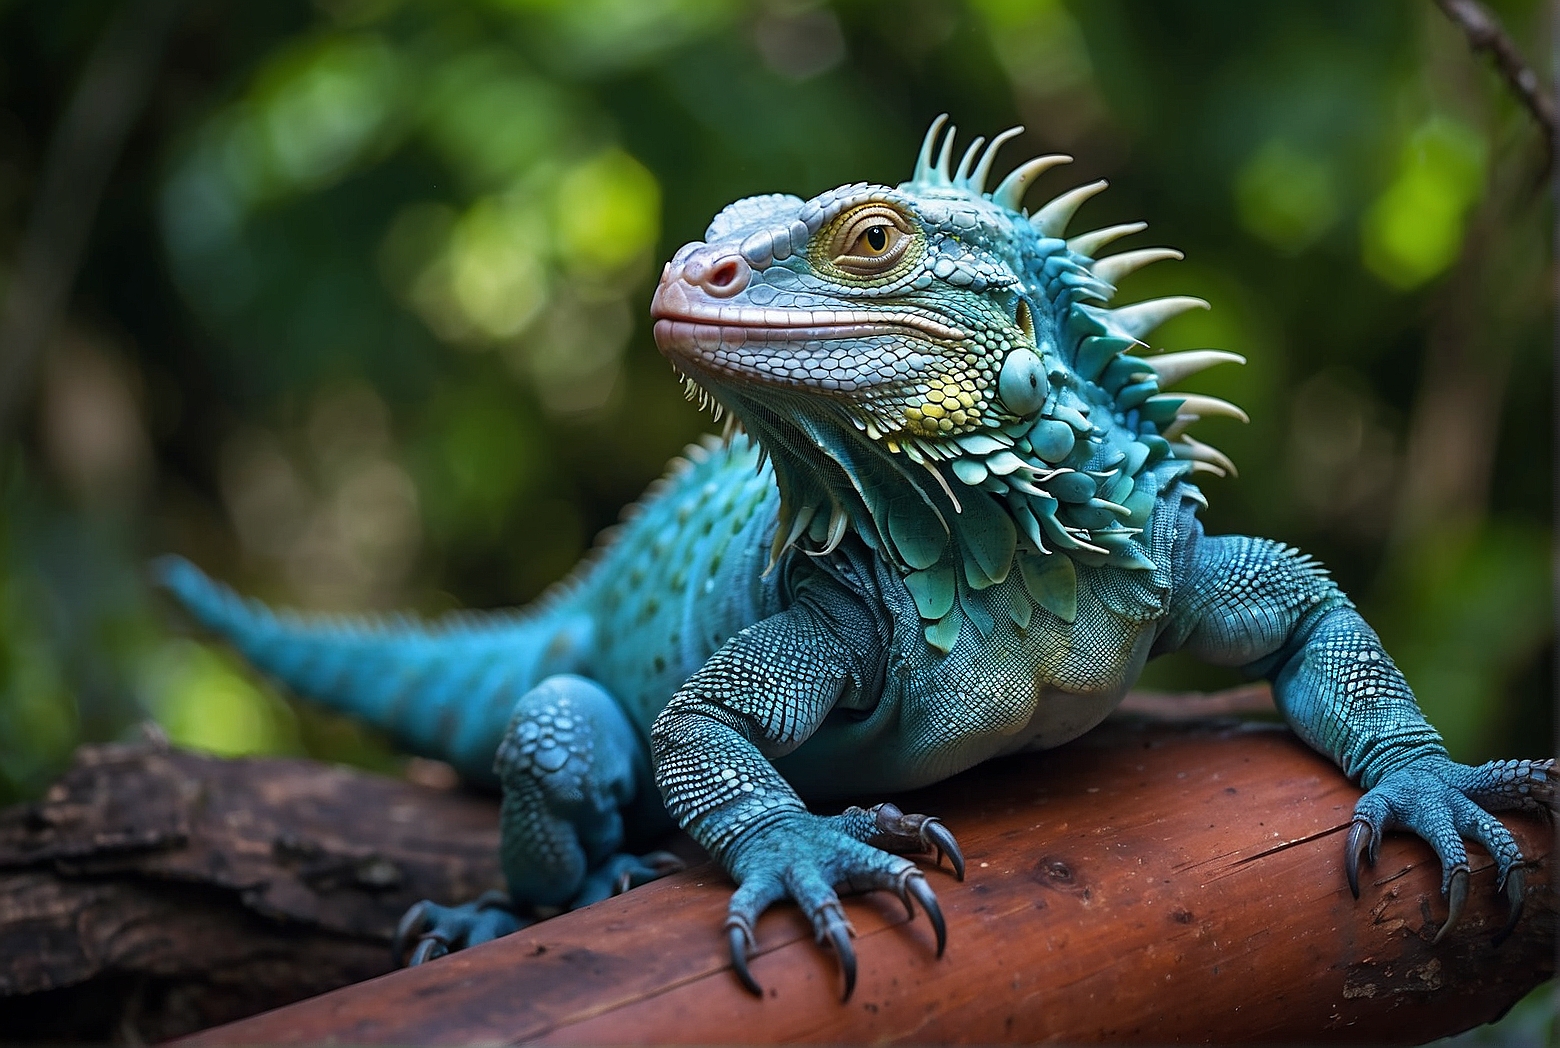 Why is my green iguana turning blue?